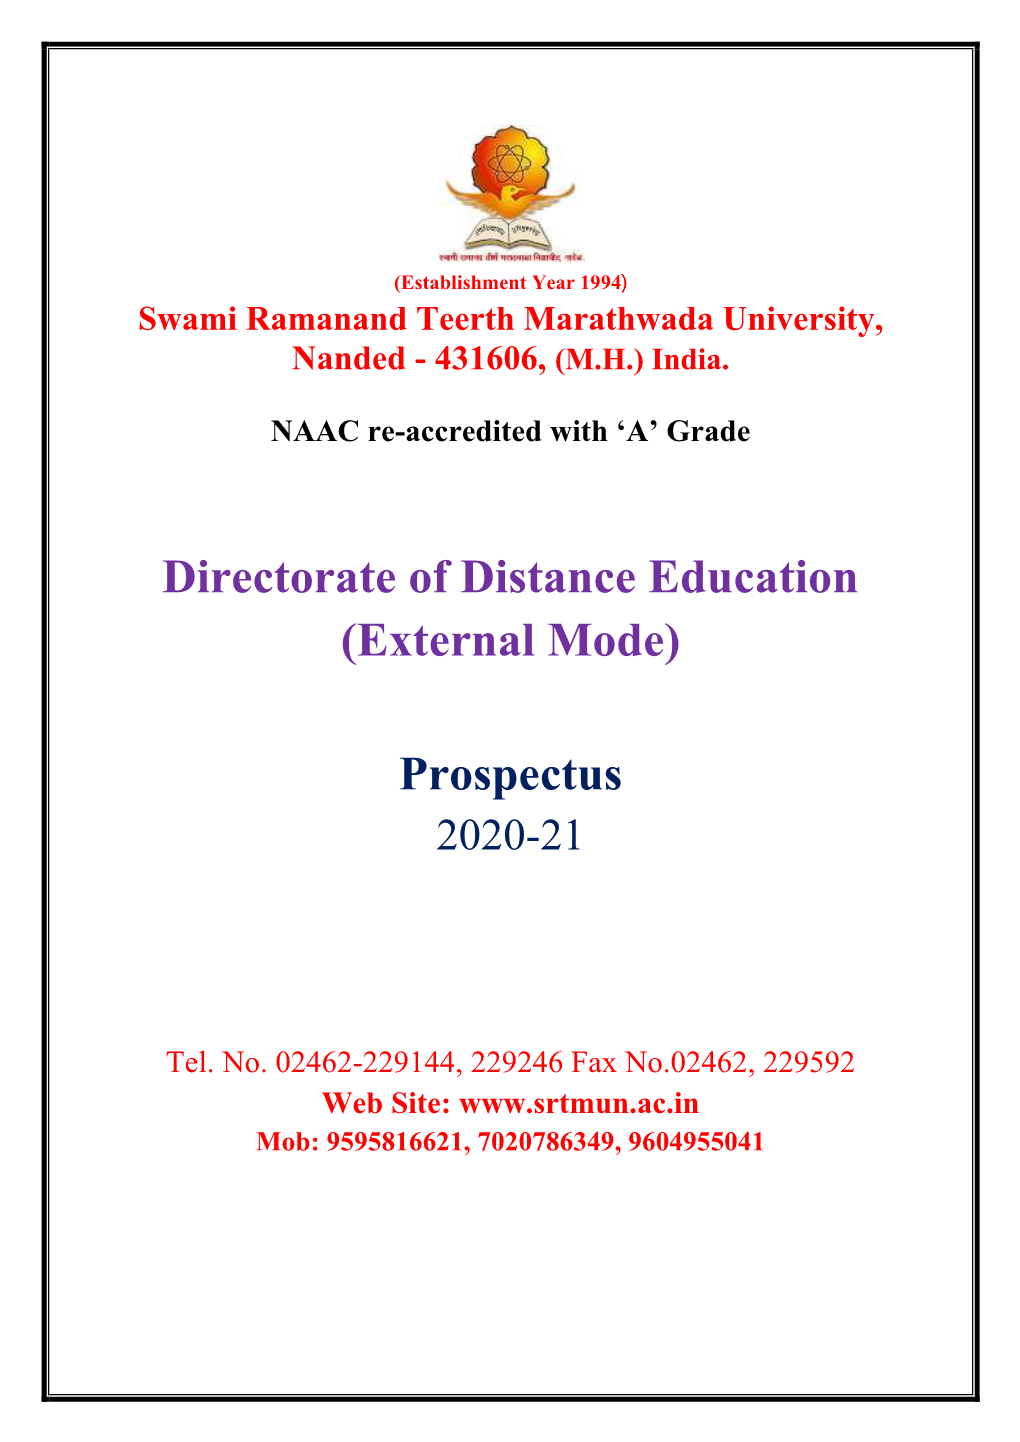 Distance Education (External Mode) Prospectus 2020-21